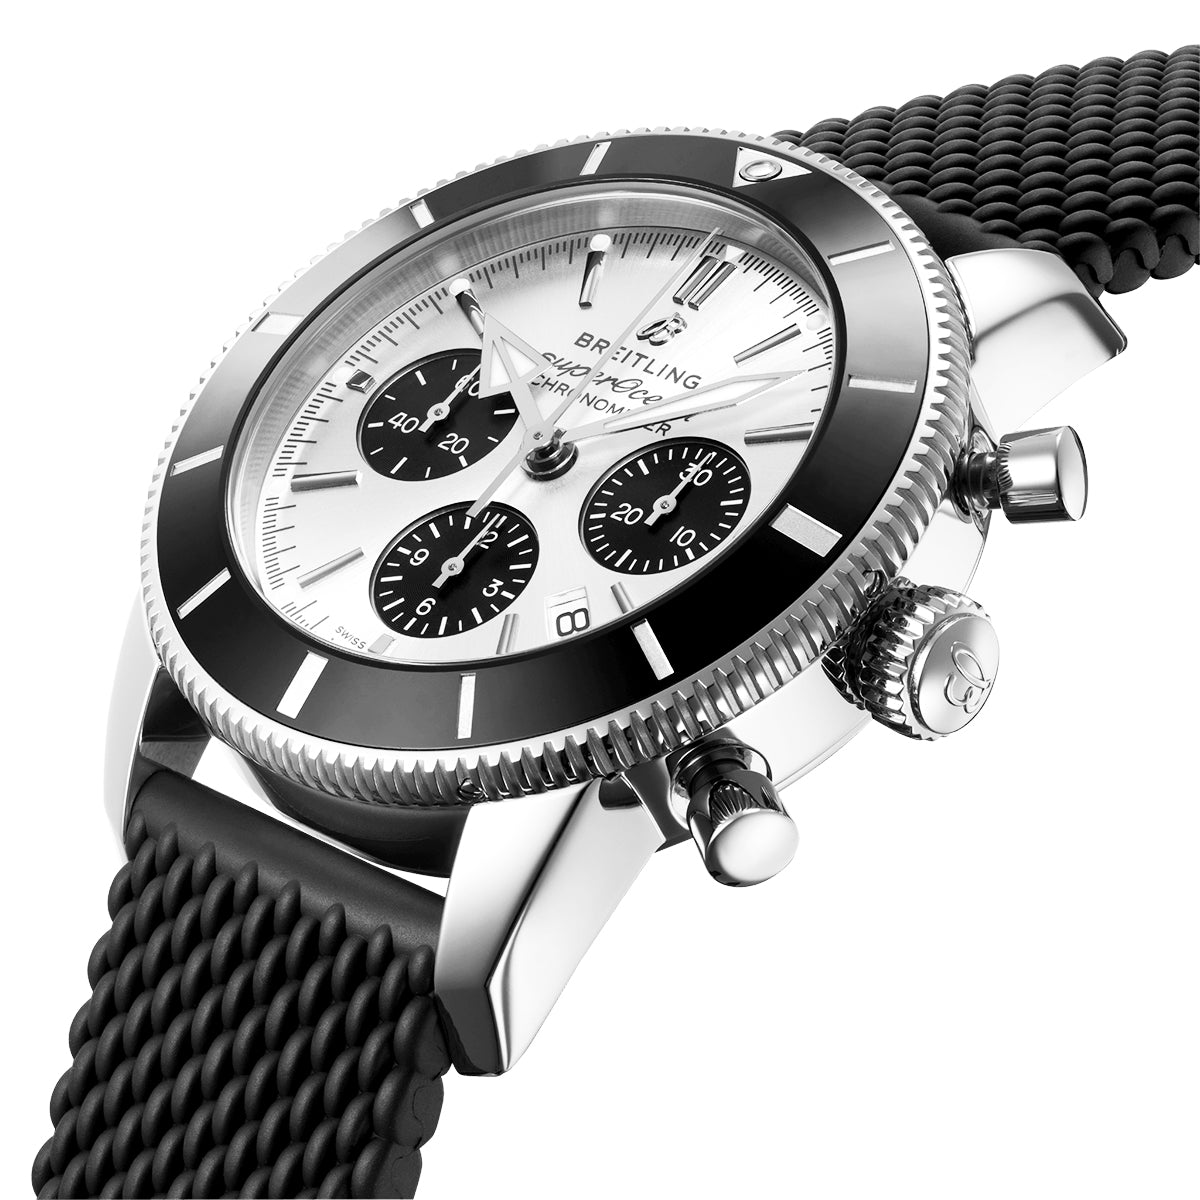 Superocean Heritage II 44mm Silver/Black Dial Rubber Strap Watch